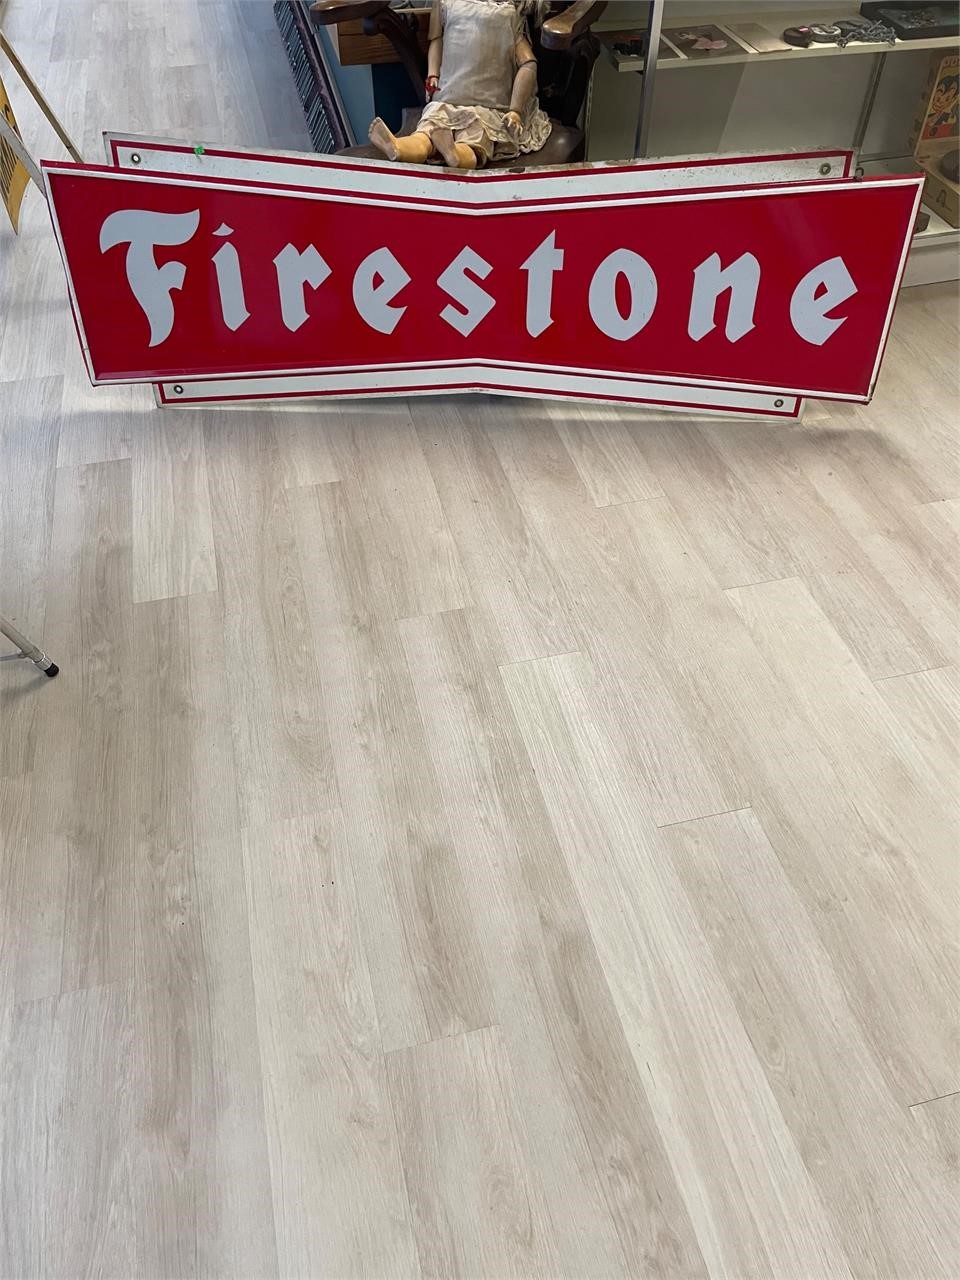 Firestone Horizontal Sign